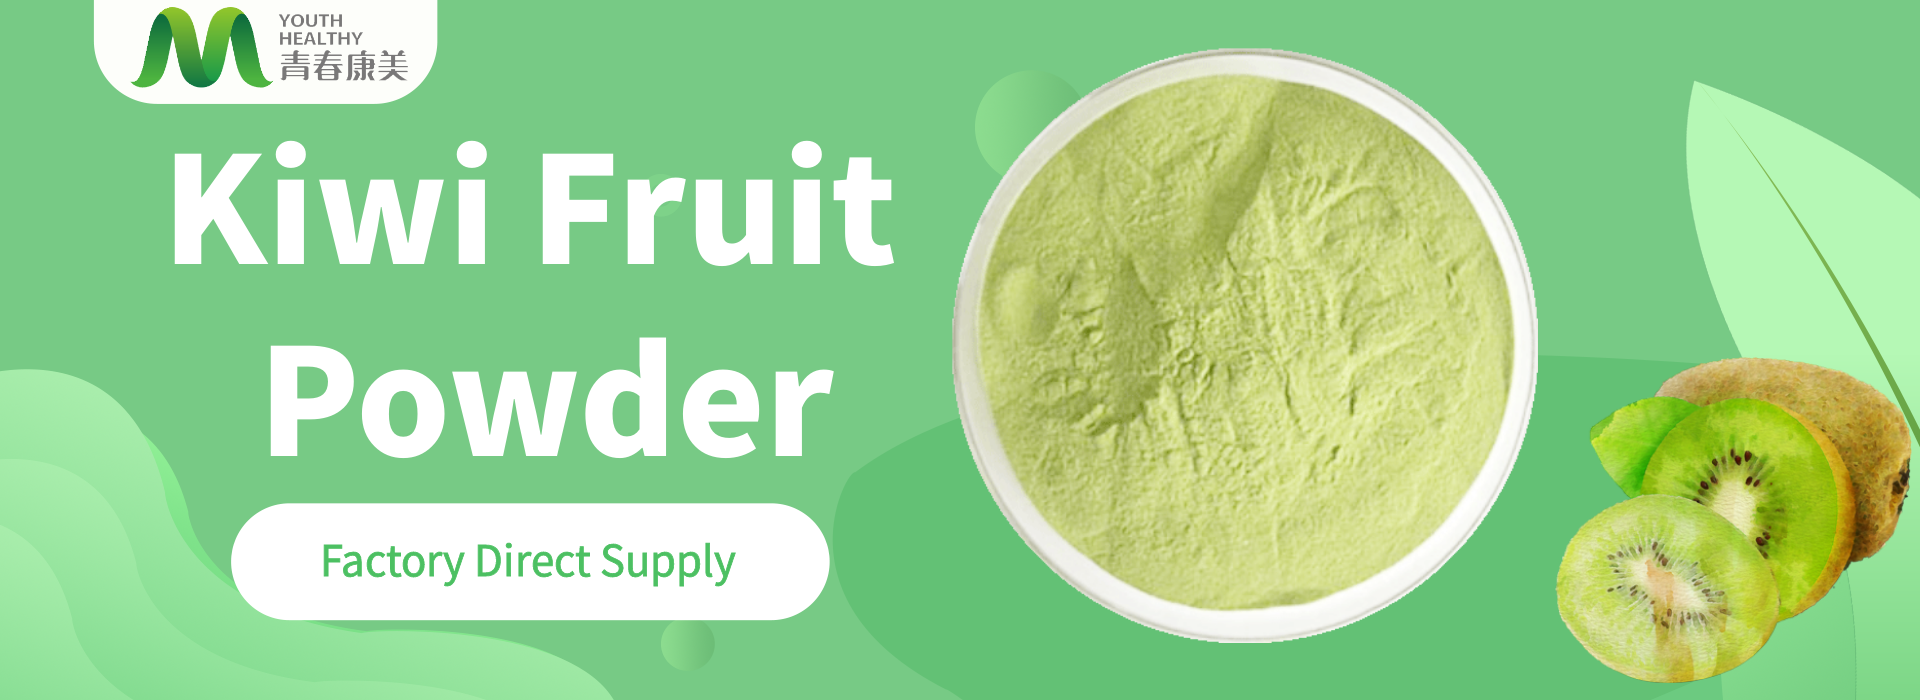 Kiwi Fruit Powder 1